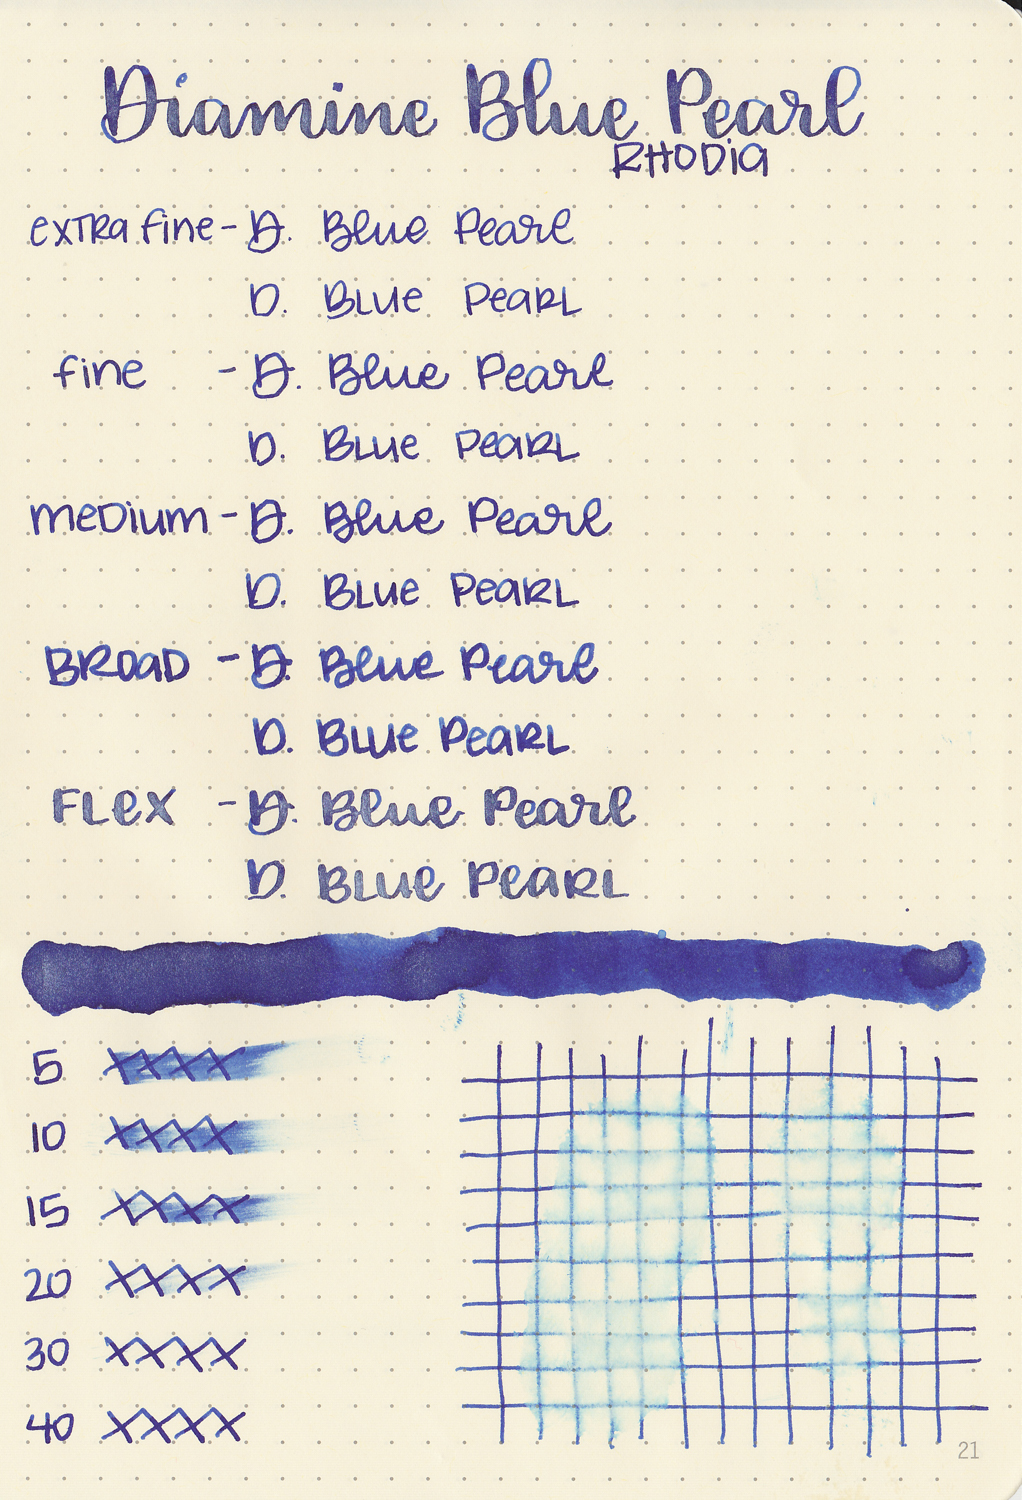 d-blue-pearl-5.jpg